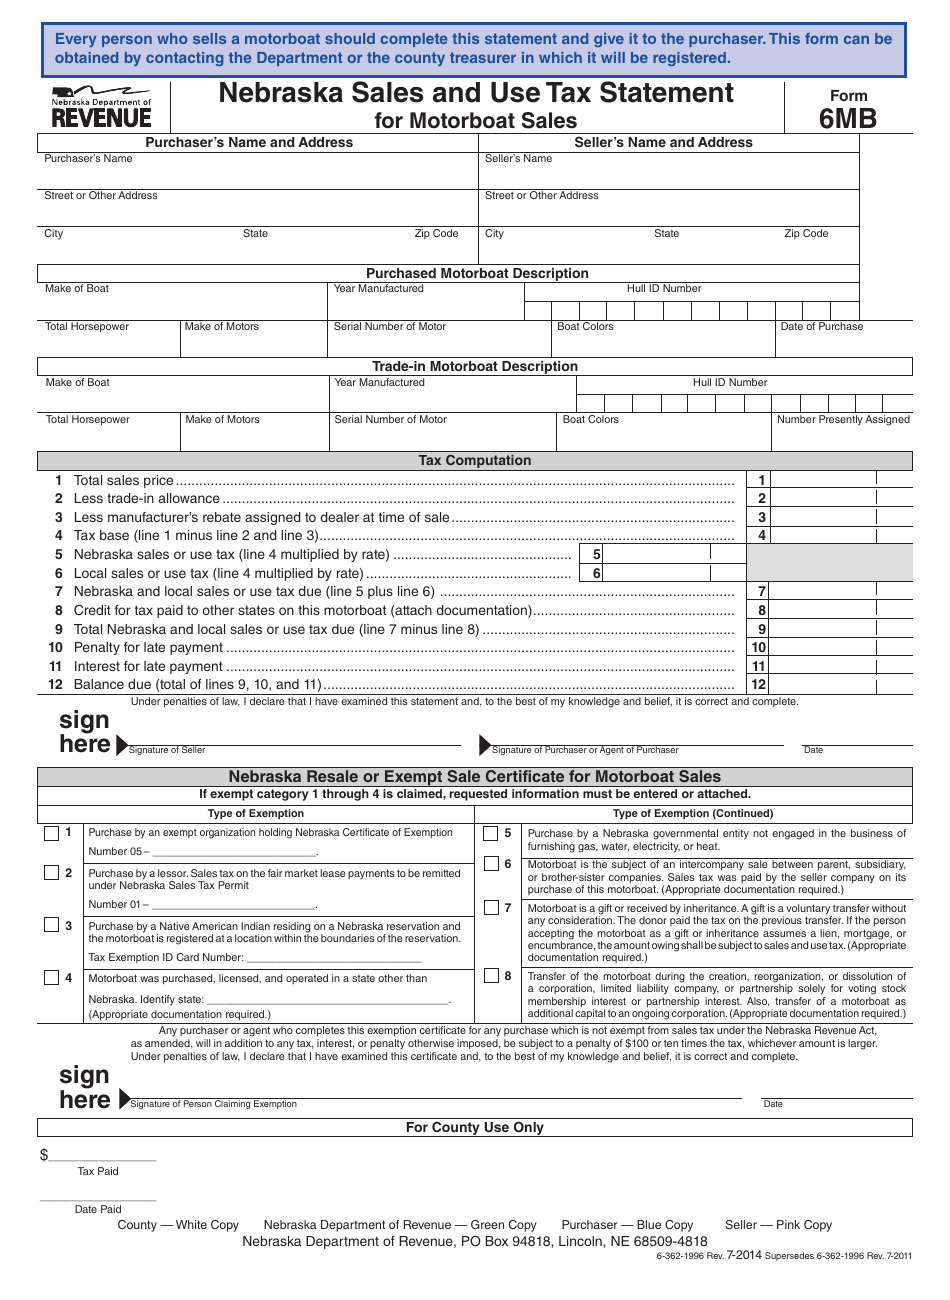 Form 6MB Nebraska Sales and Use Tax Statement for Motorboat Sales - Nebraska, Page 1